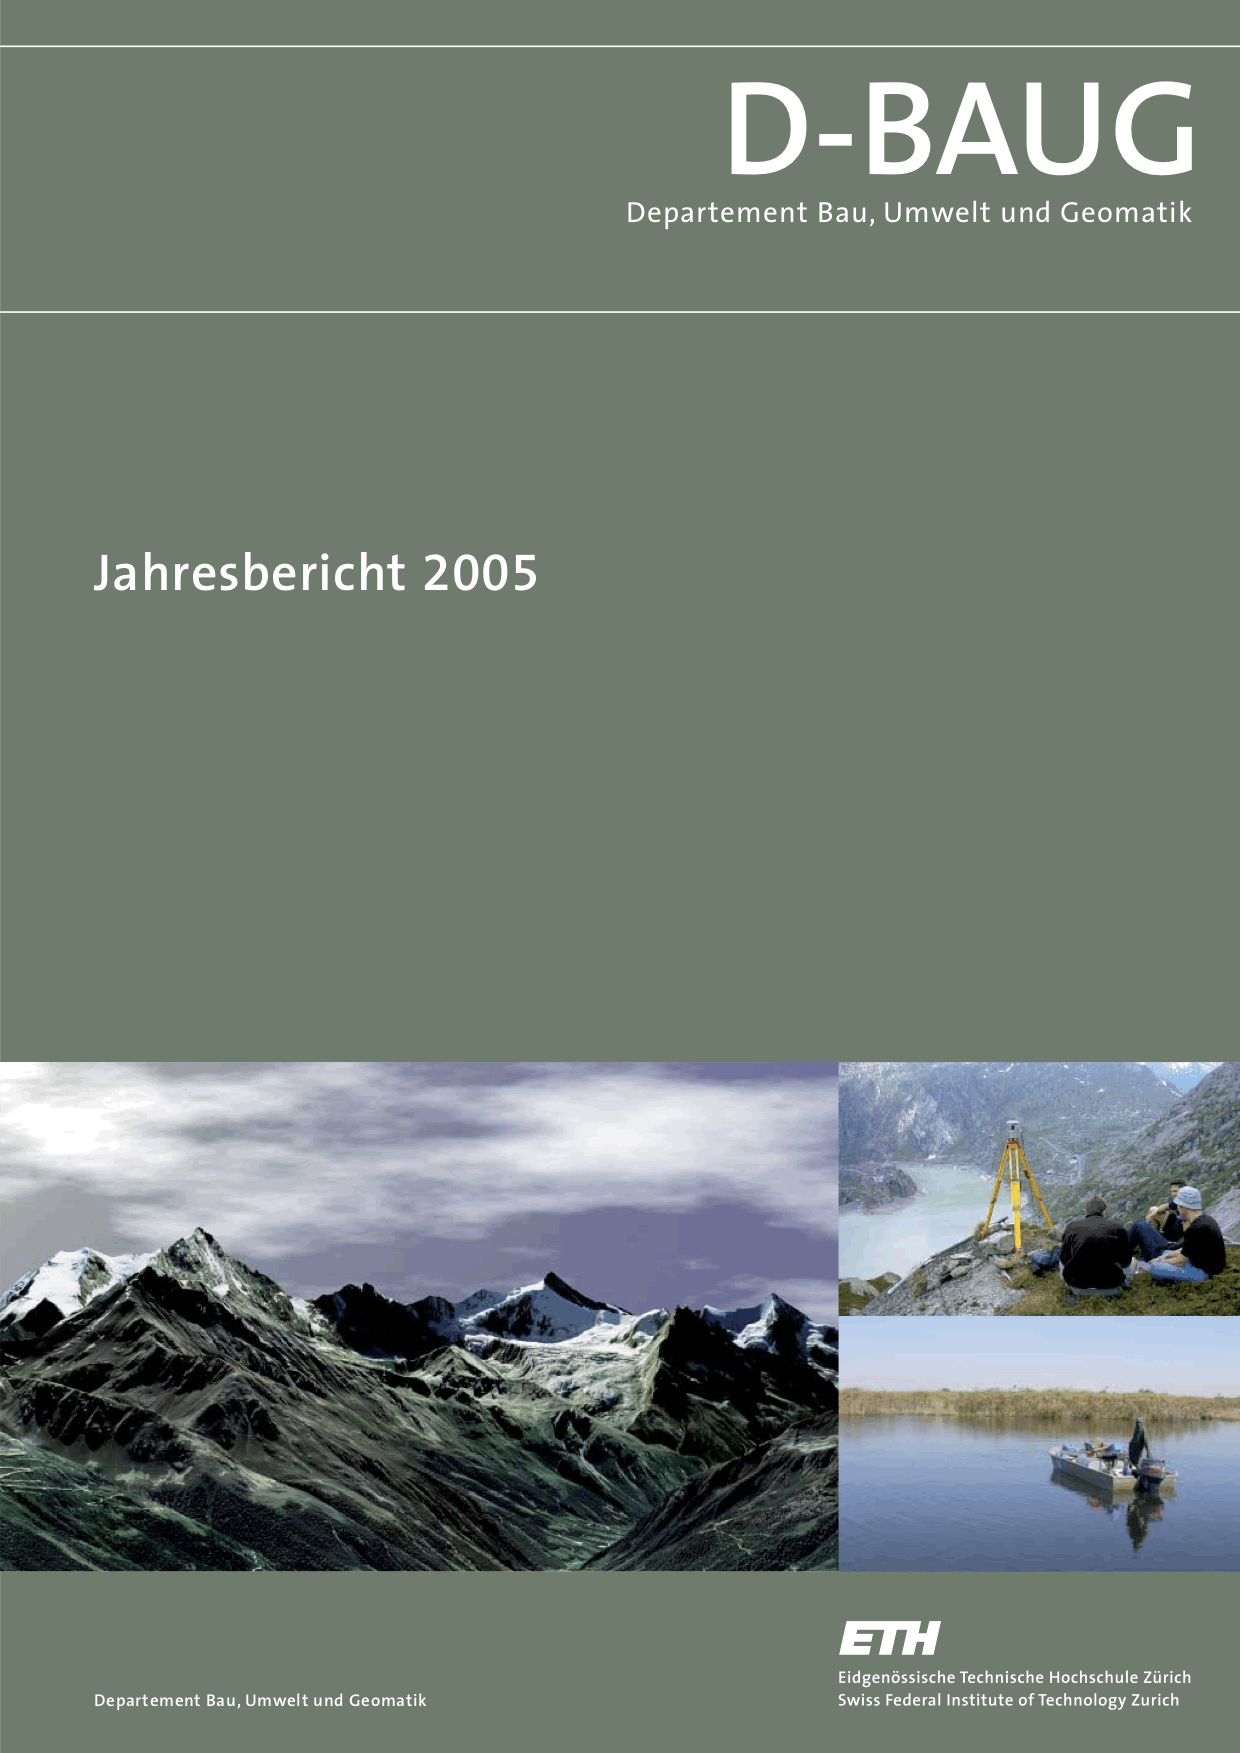 D-BAUG Annual report 2005